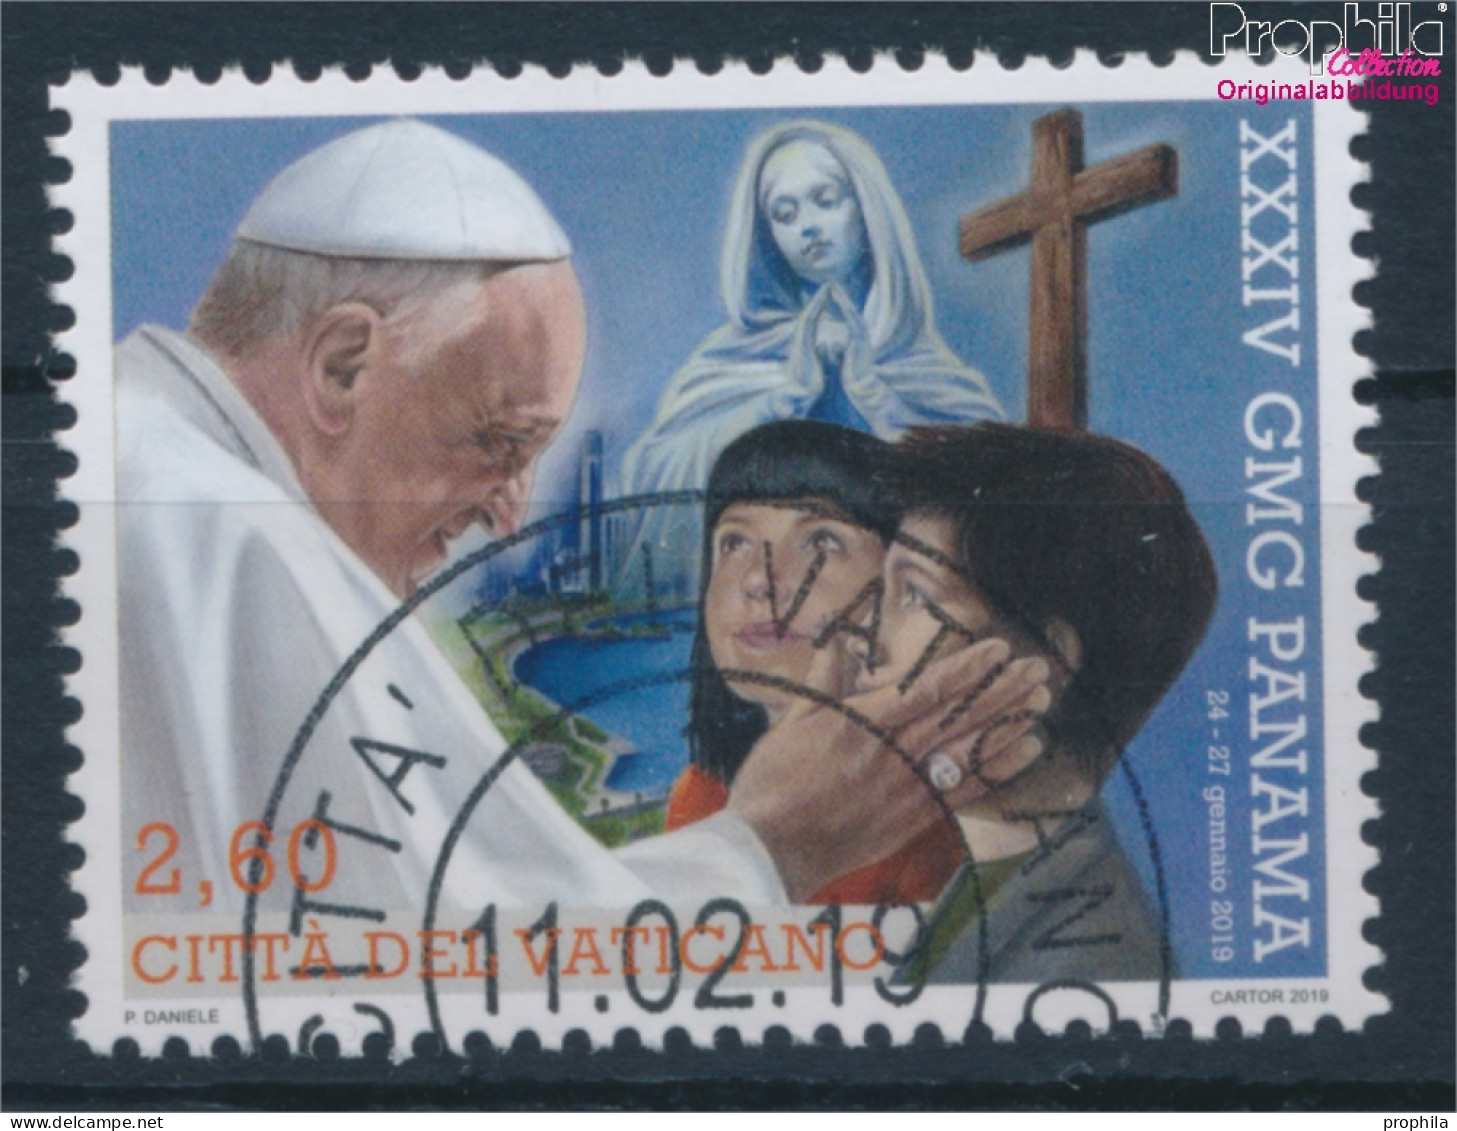 Vatikanstadt 1955 (kompl.Ausg.) Gestempelt 2019 Weltjugendtag (10405924 - Gebraucht